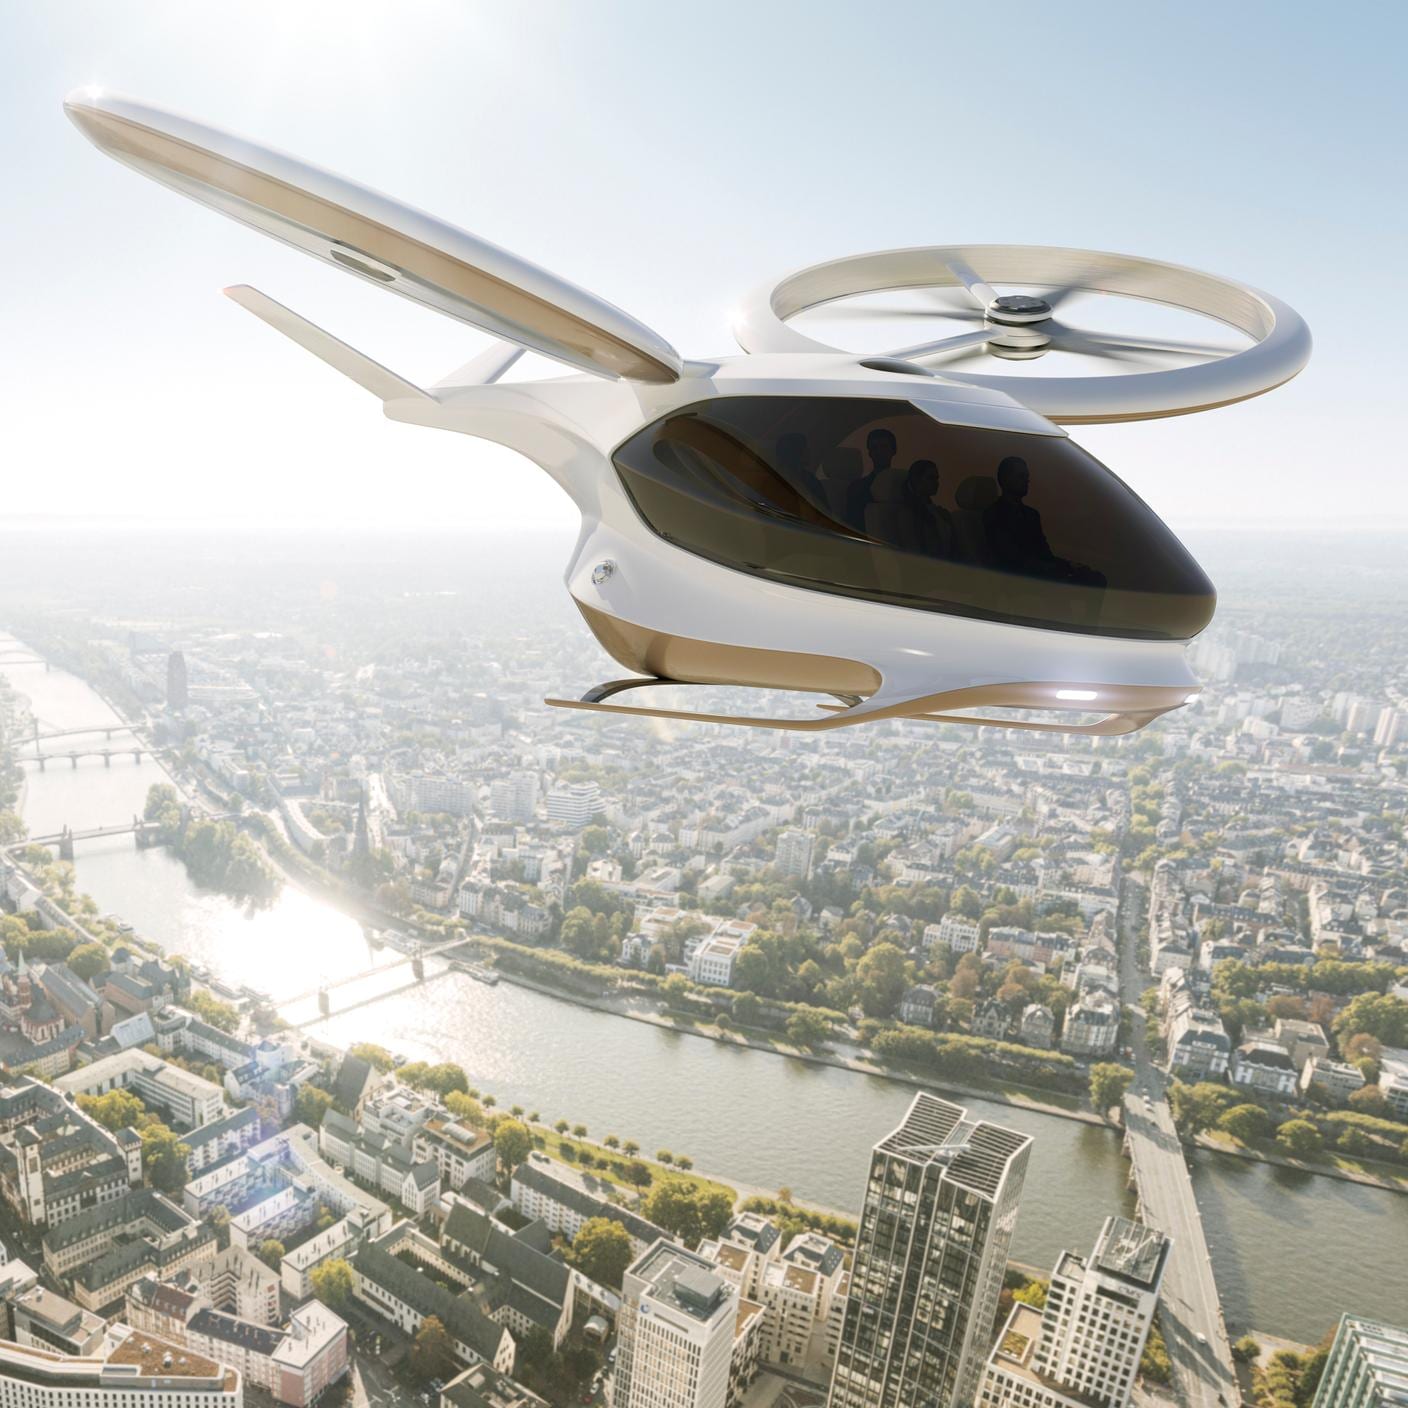 Making the future if flight - eVTOL flying over city